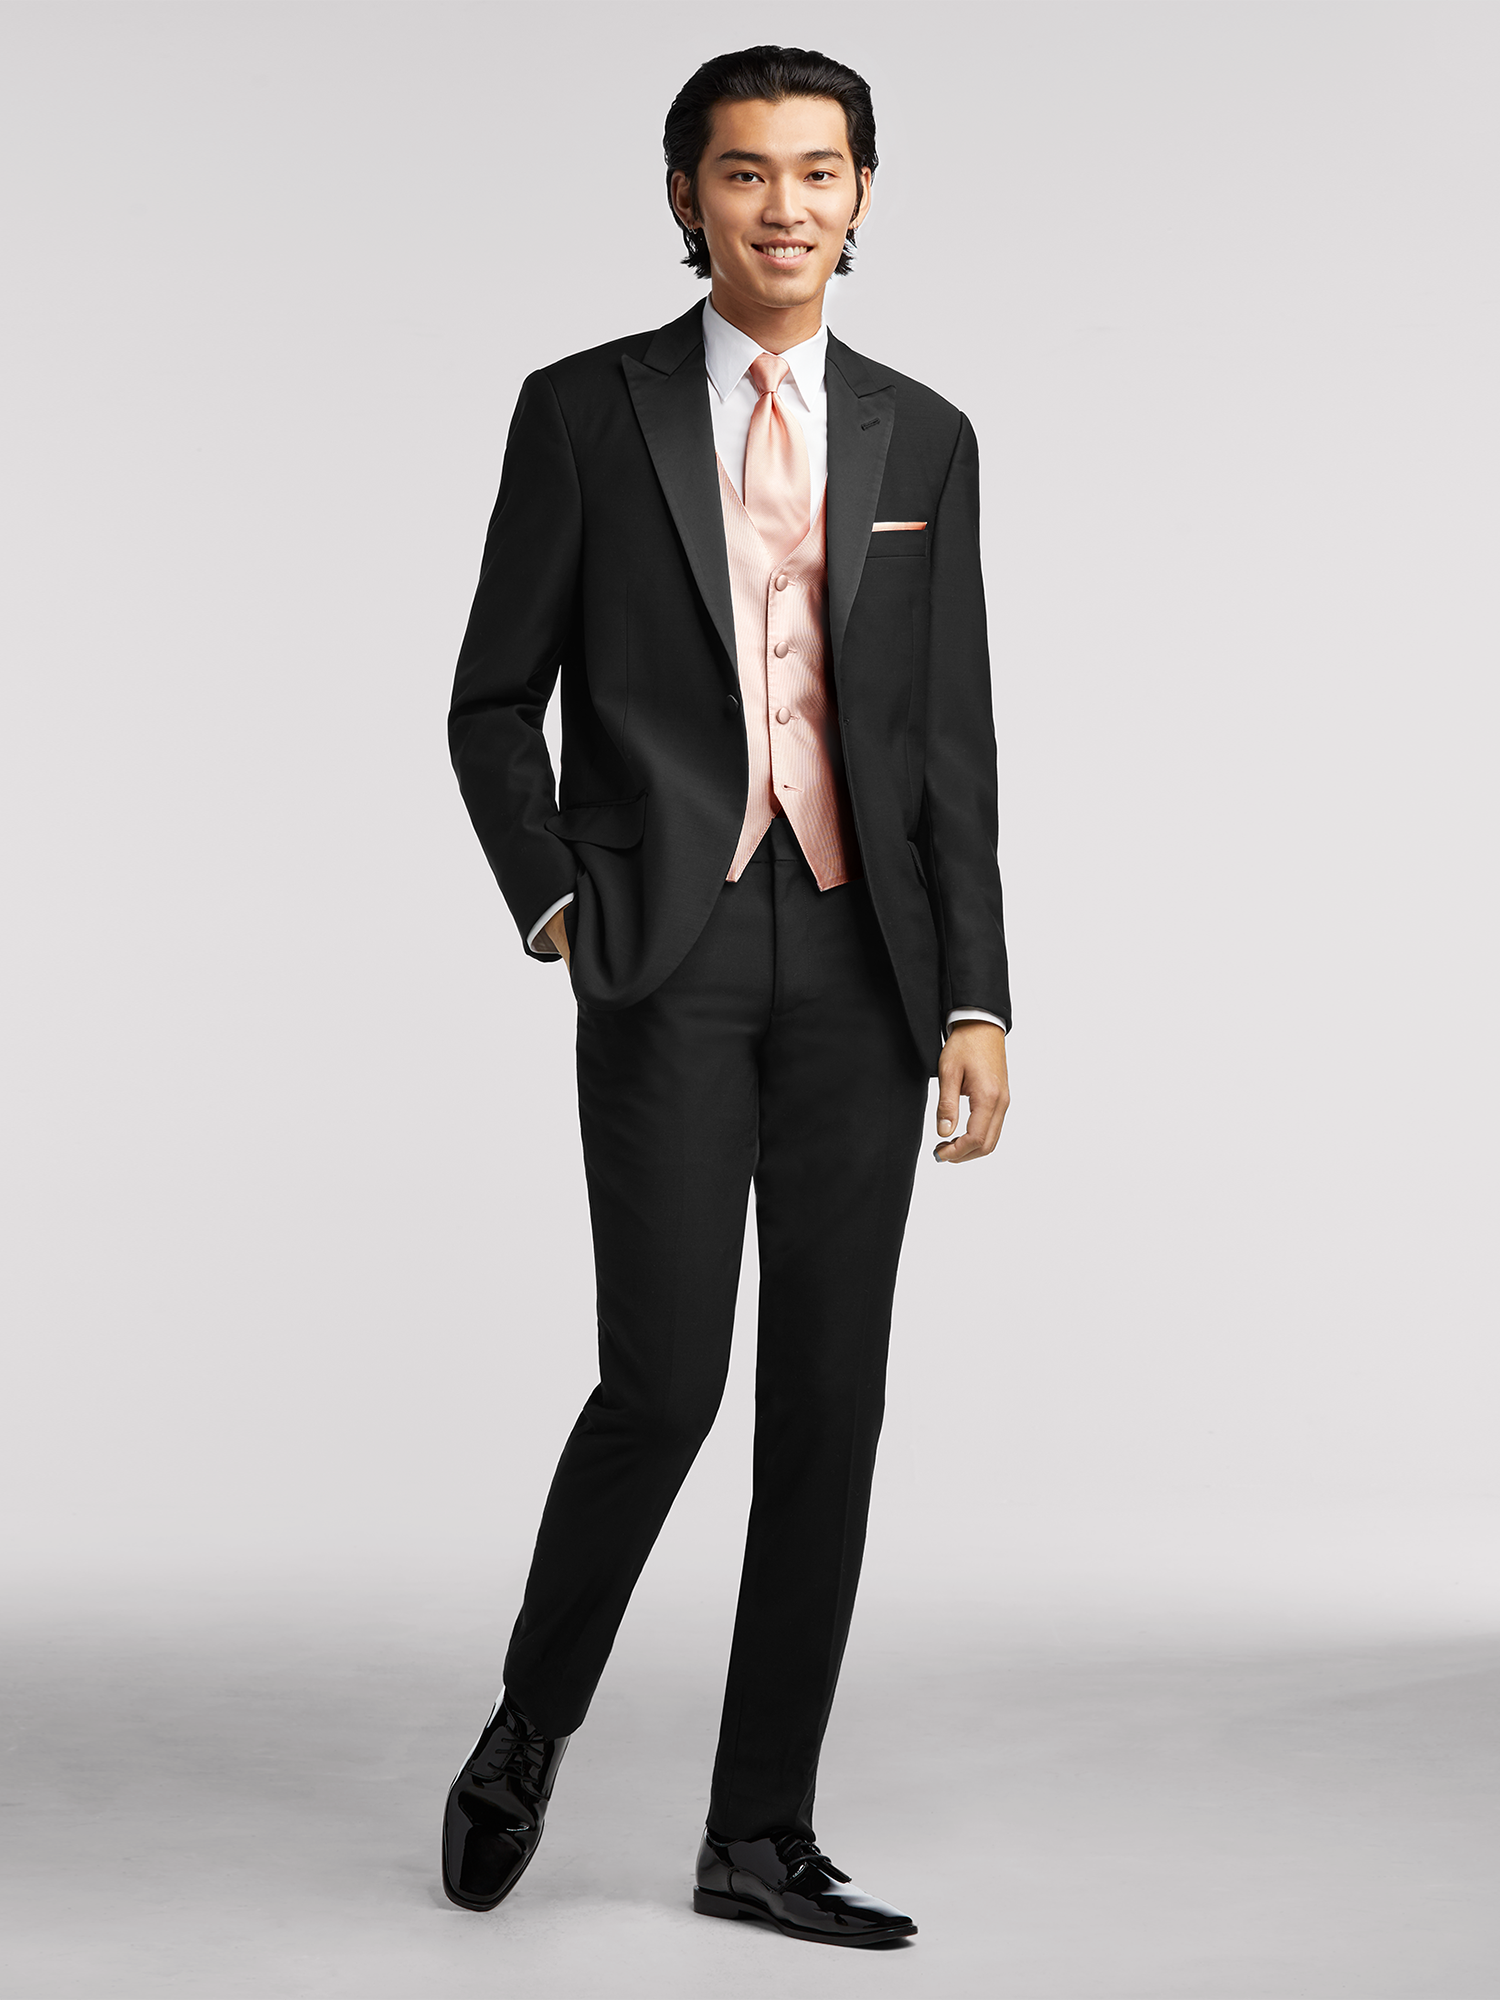 Black Tuxedo - Calvin Klein - Shawl Lapel | Moores Clothing